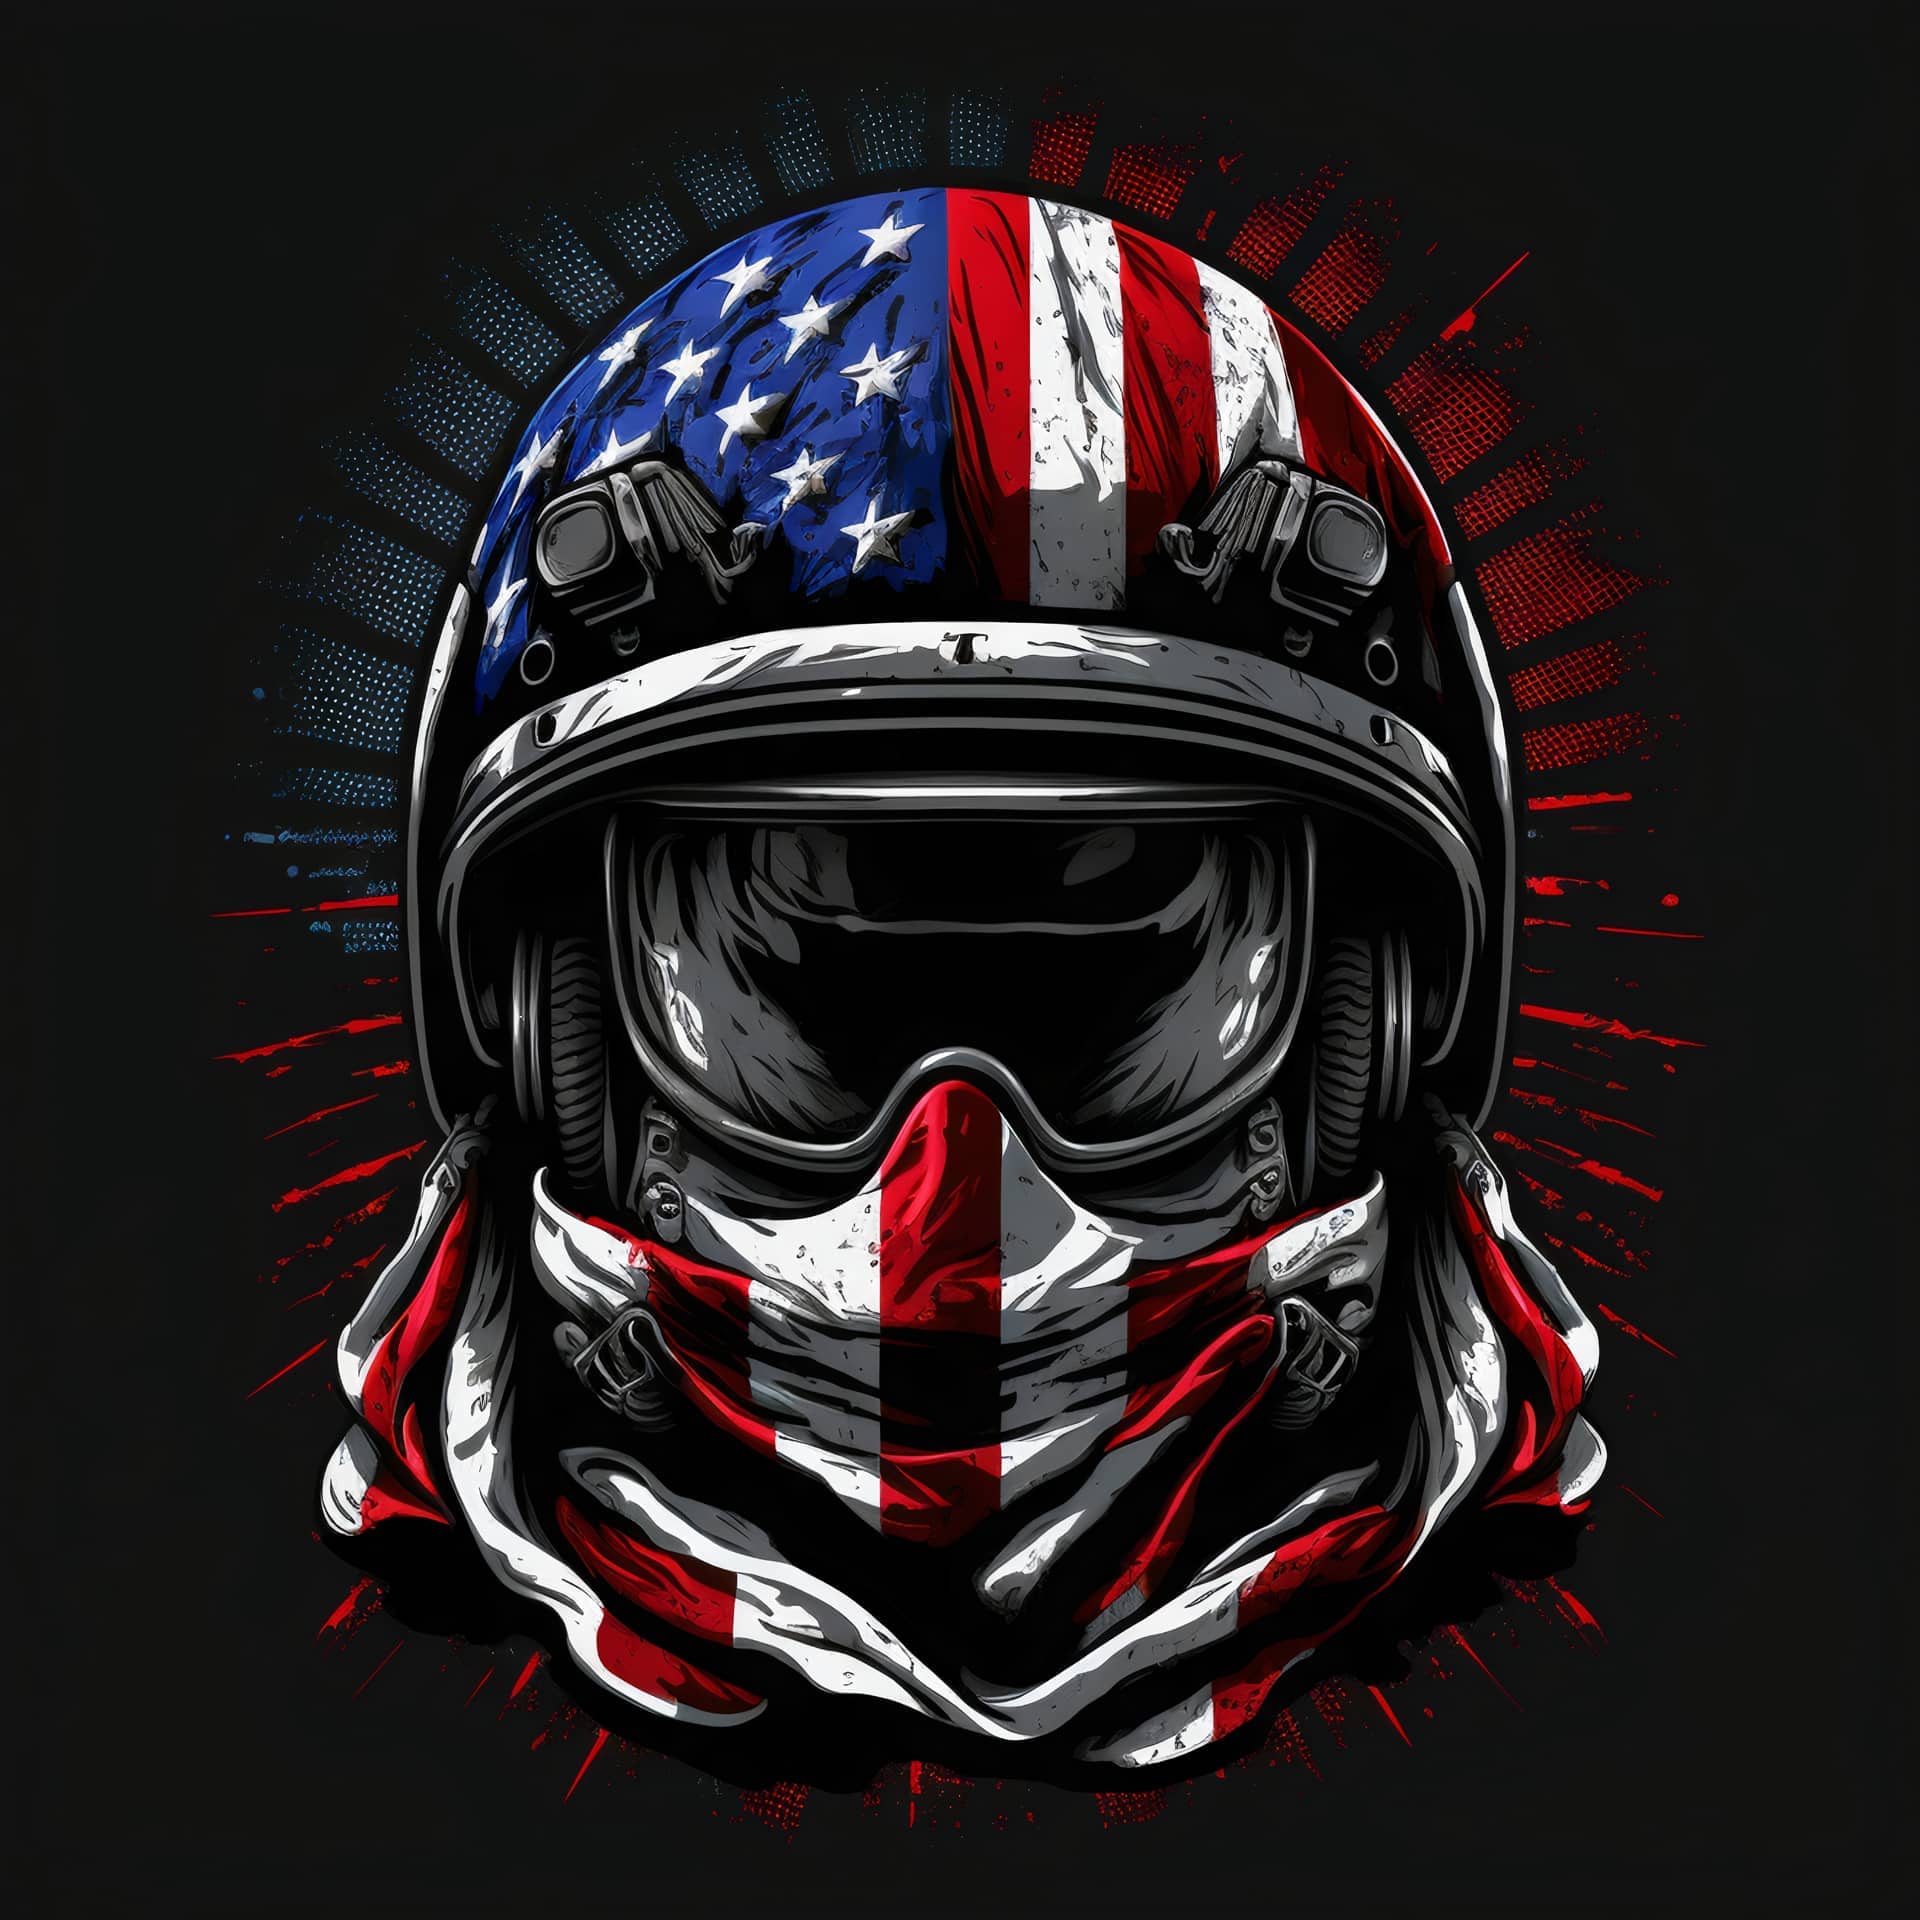 Pilot helmet design with american flag